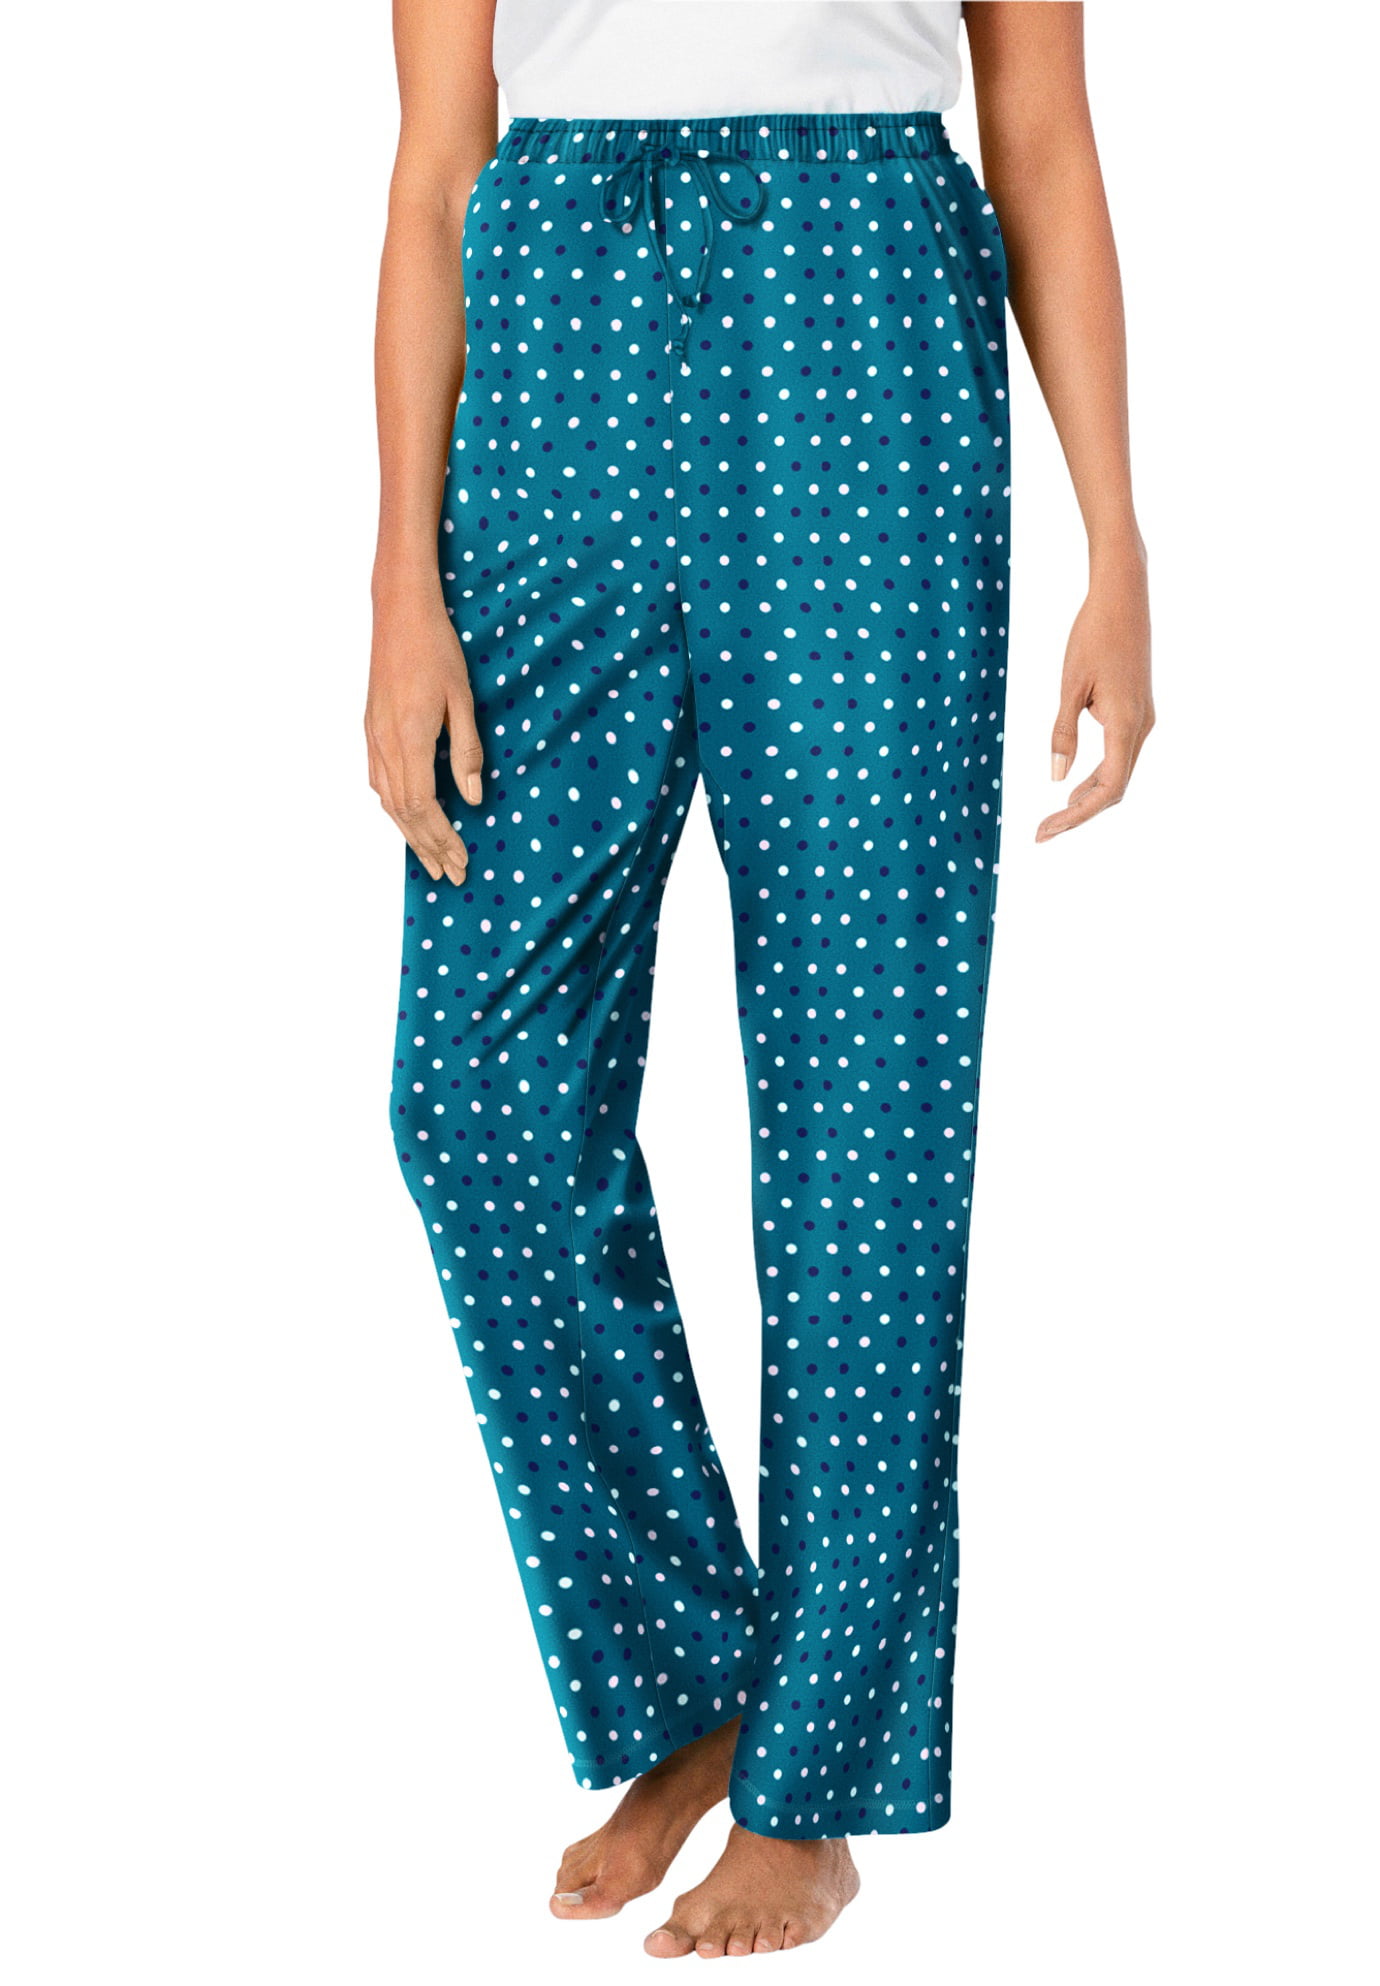 Dreams & Co. Women's Plus Size Knit Sleep Pant Pajama Bottoms - L, Deep ...